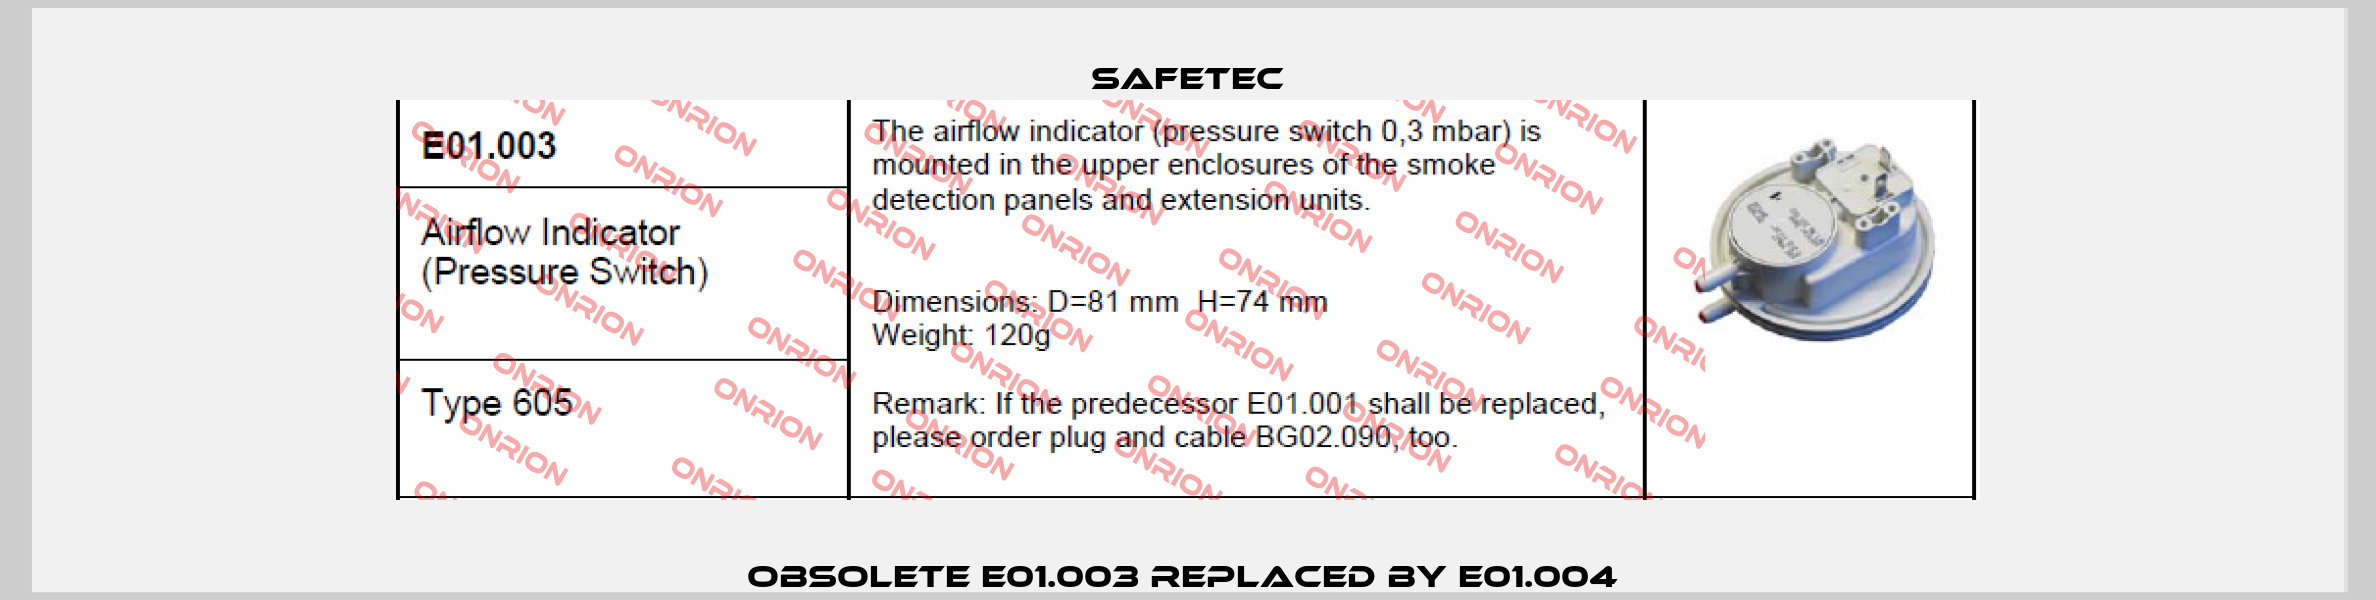 Obsolete E01.003 replaced by E01.004  Safetec